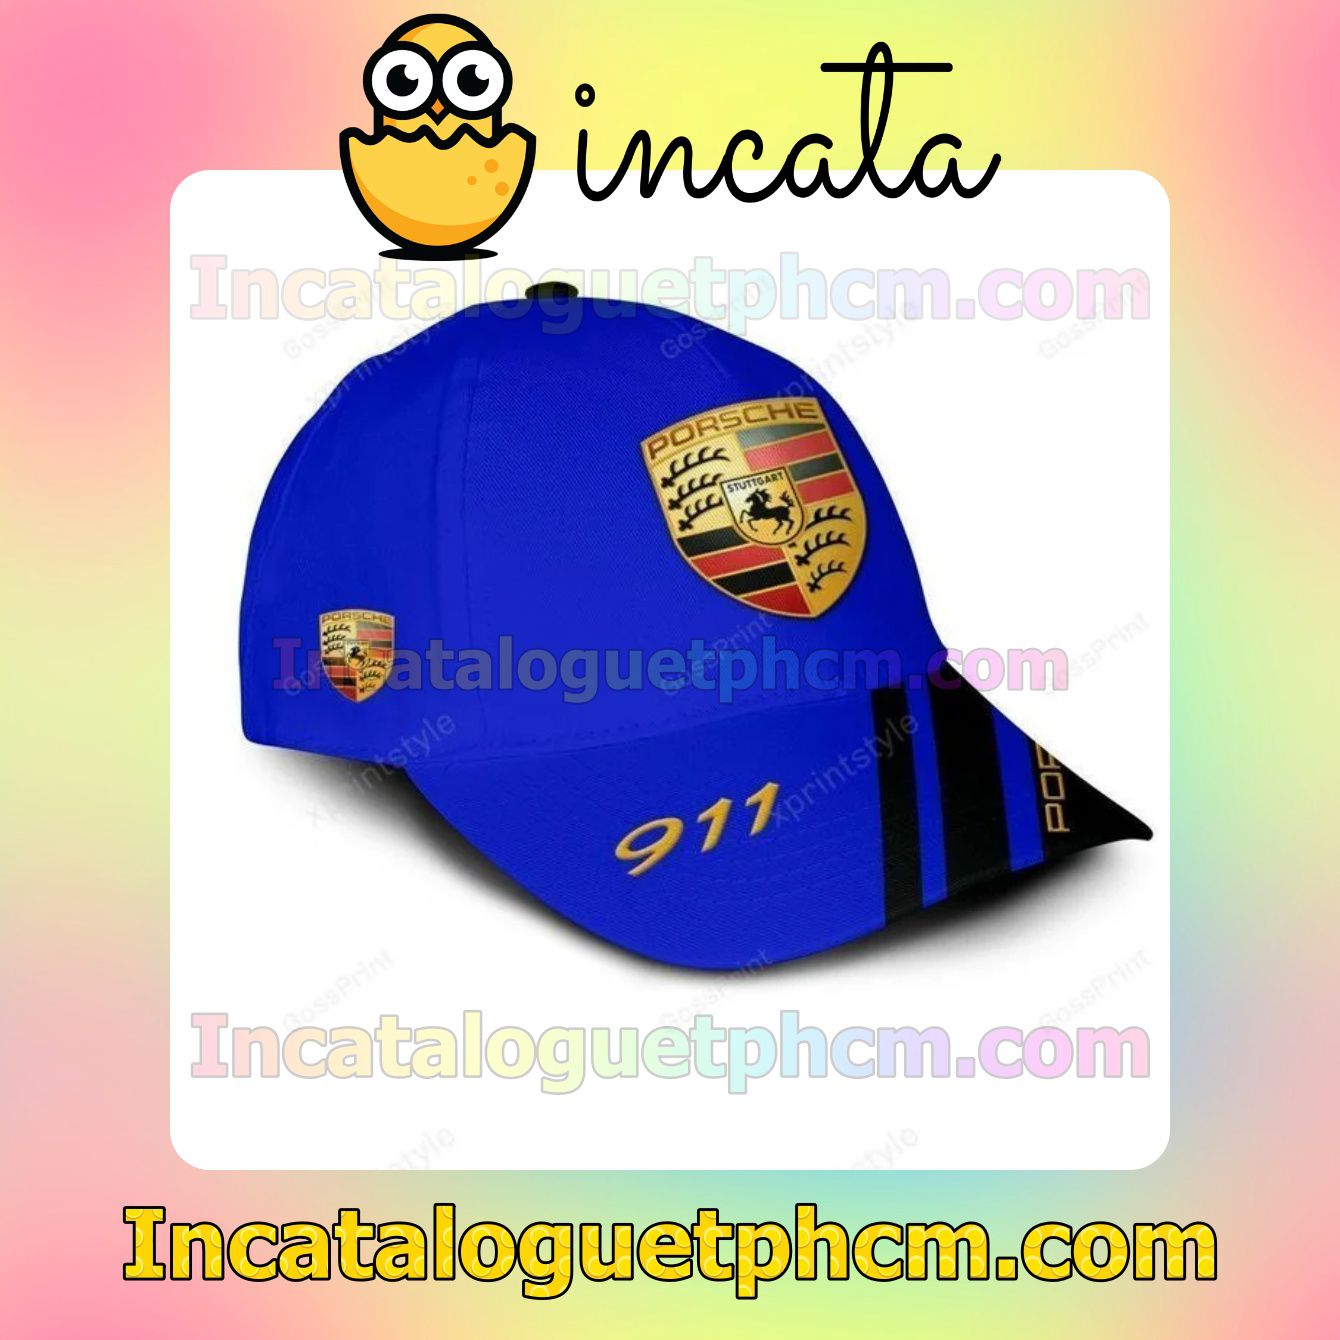 Handmade Porsche 911 Blue Classic Hat Caps Gift For Men